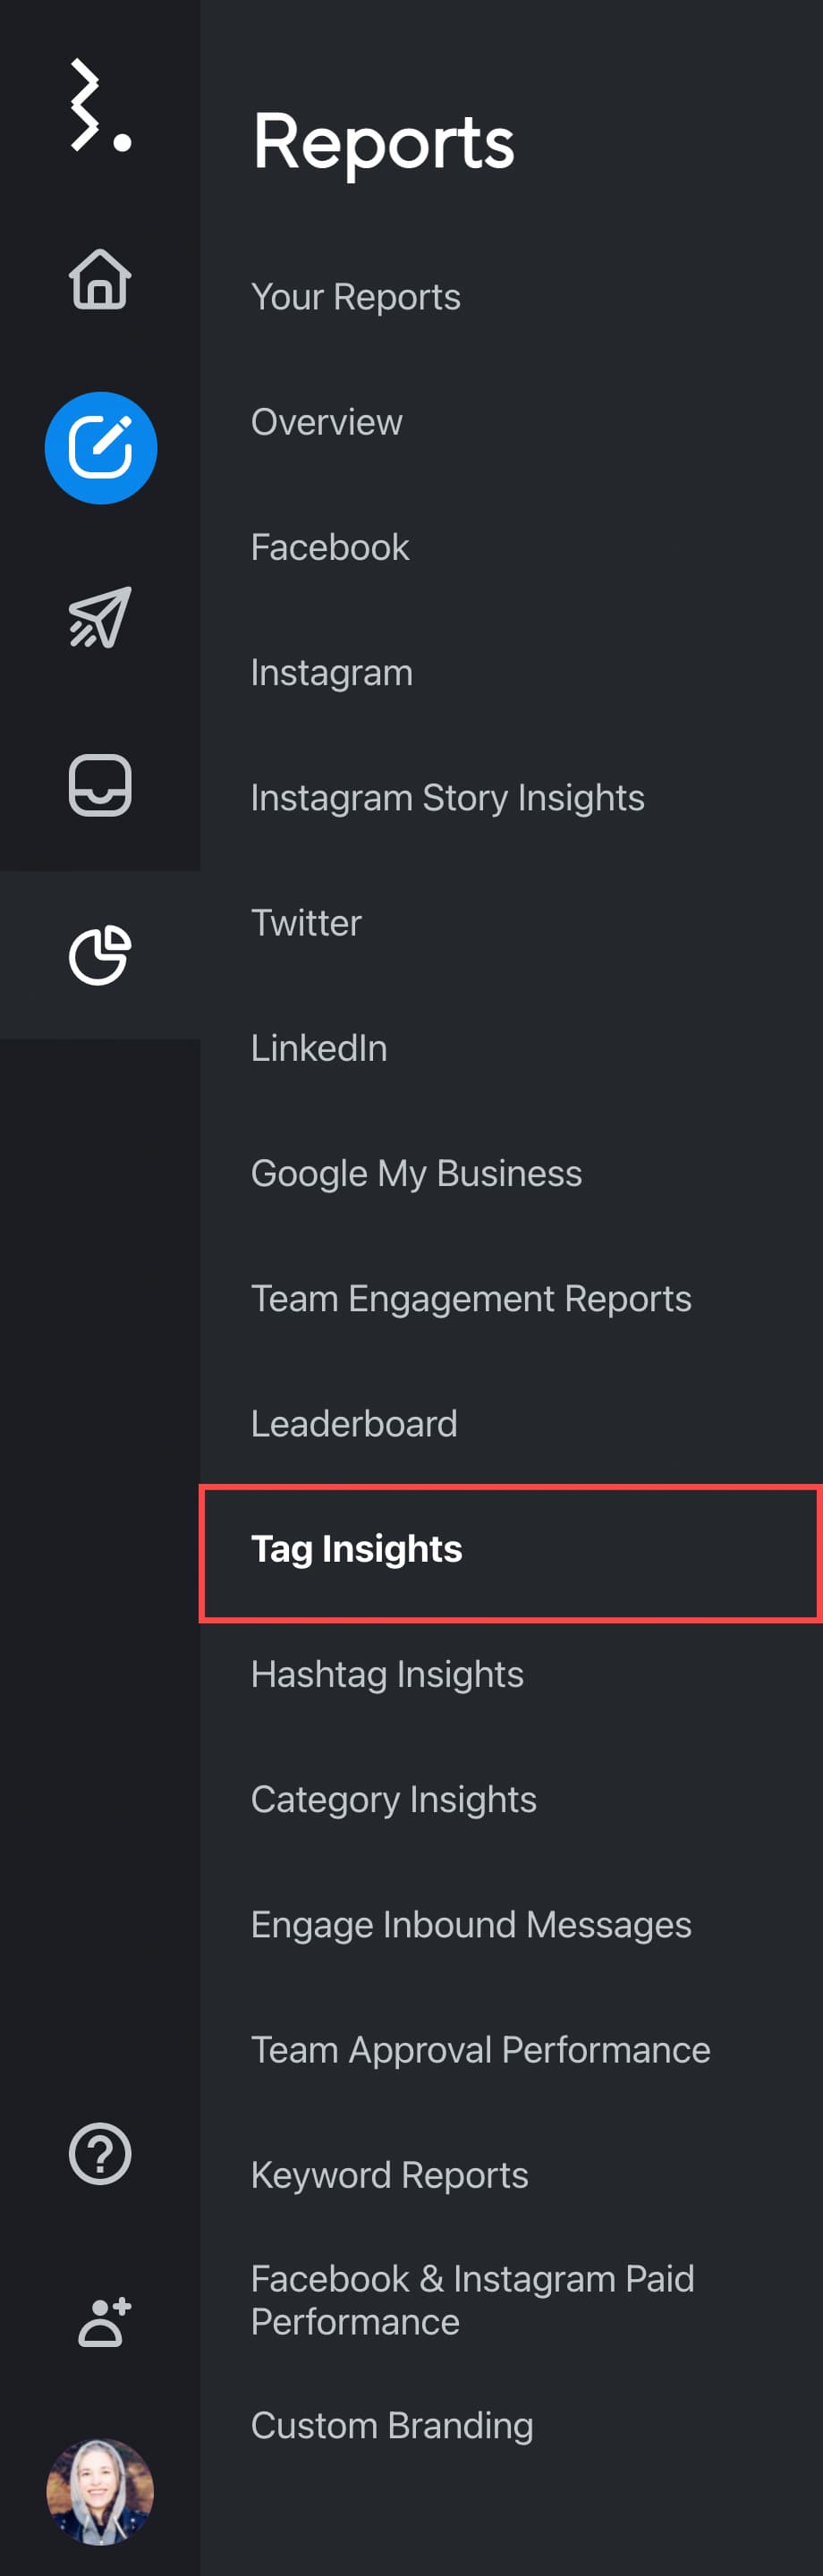 tag_insights.jpg